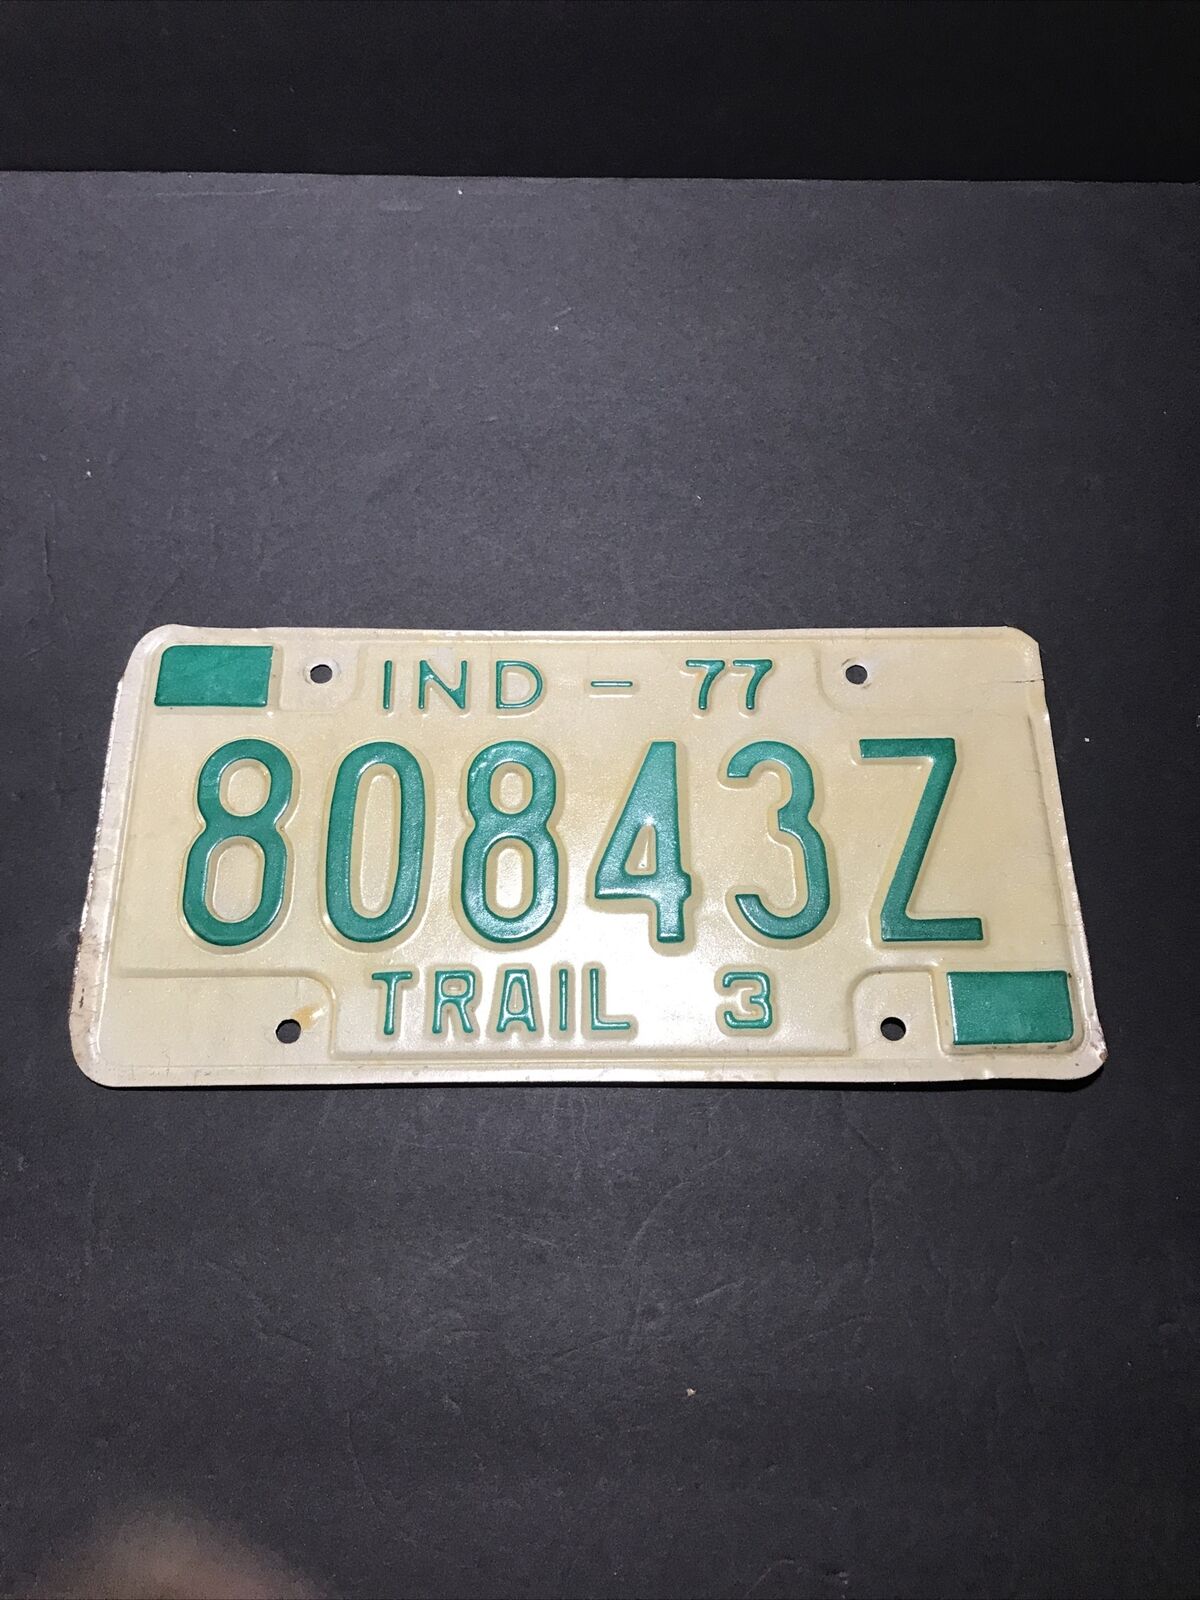 Vintage 1977 Indiana License Plate Trail 3 80843Z